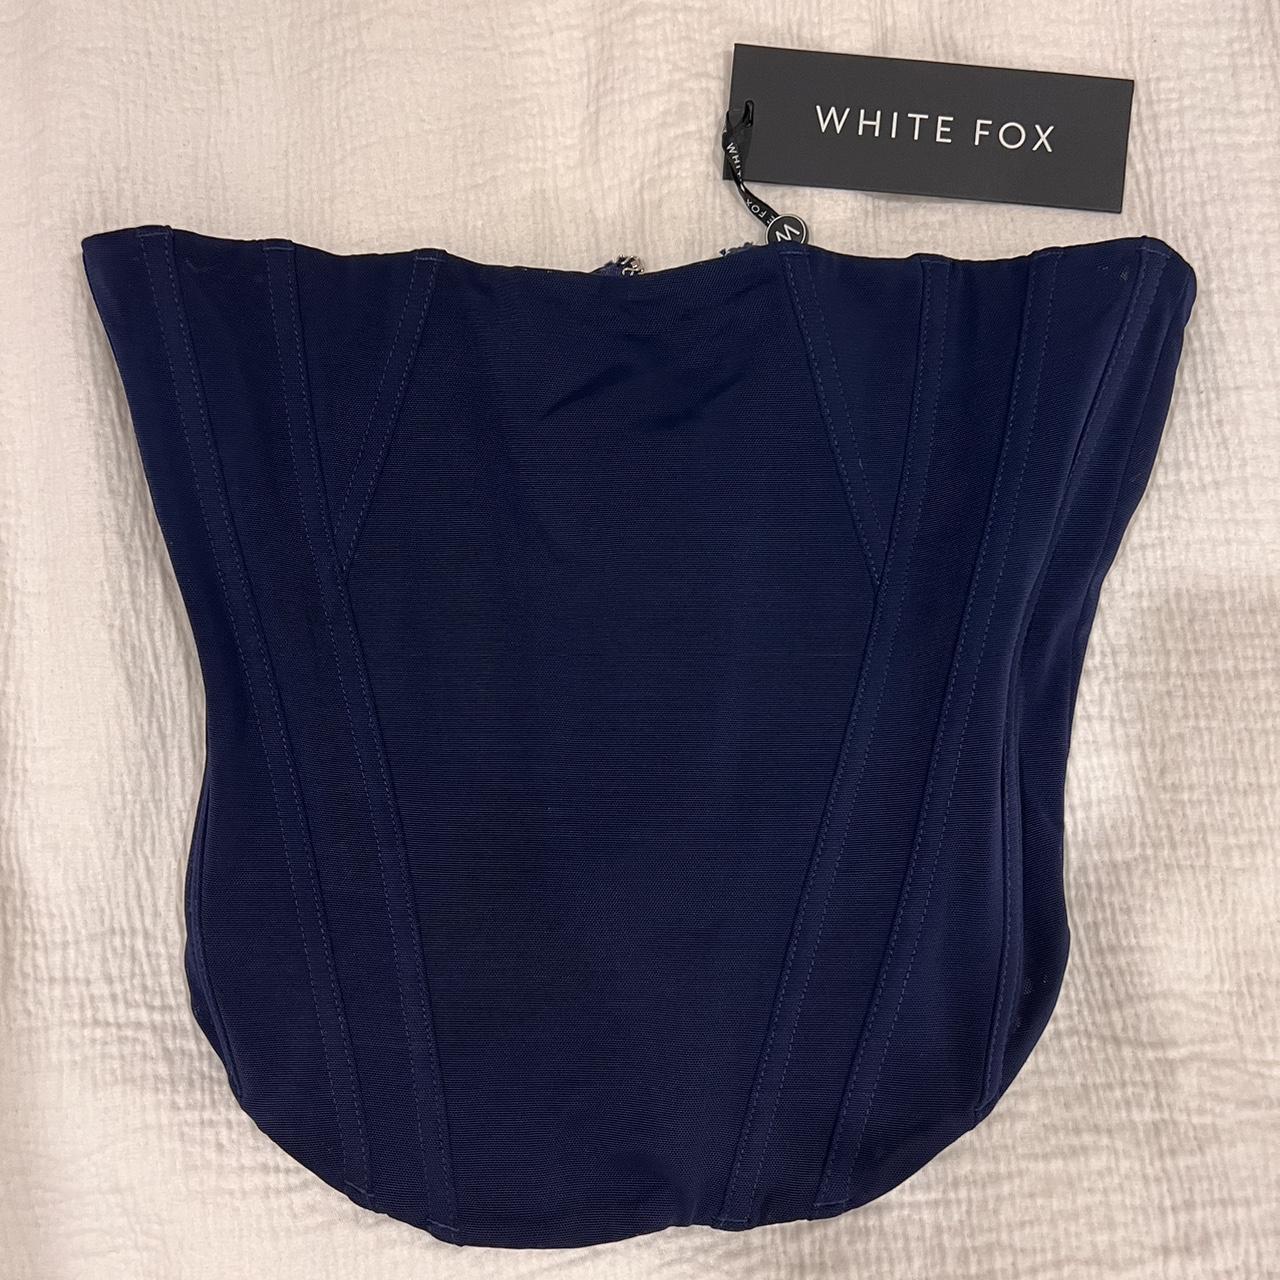 WHITE FOX CORSET BUSTIER size m paid $70 brand... - Depop